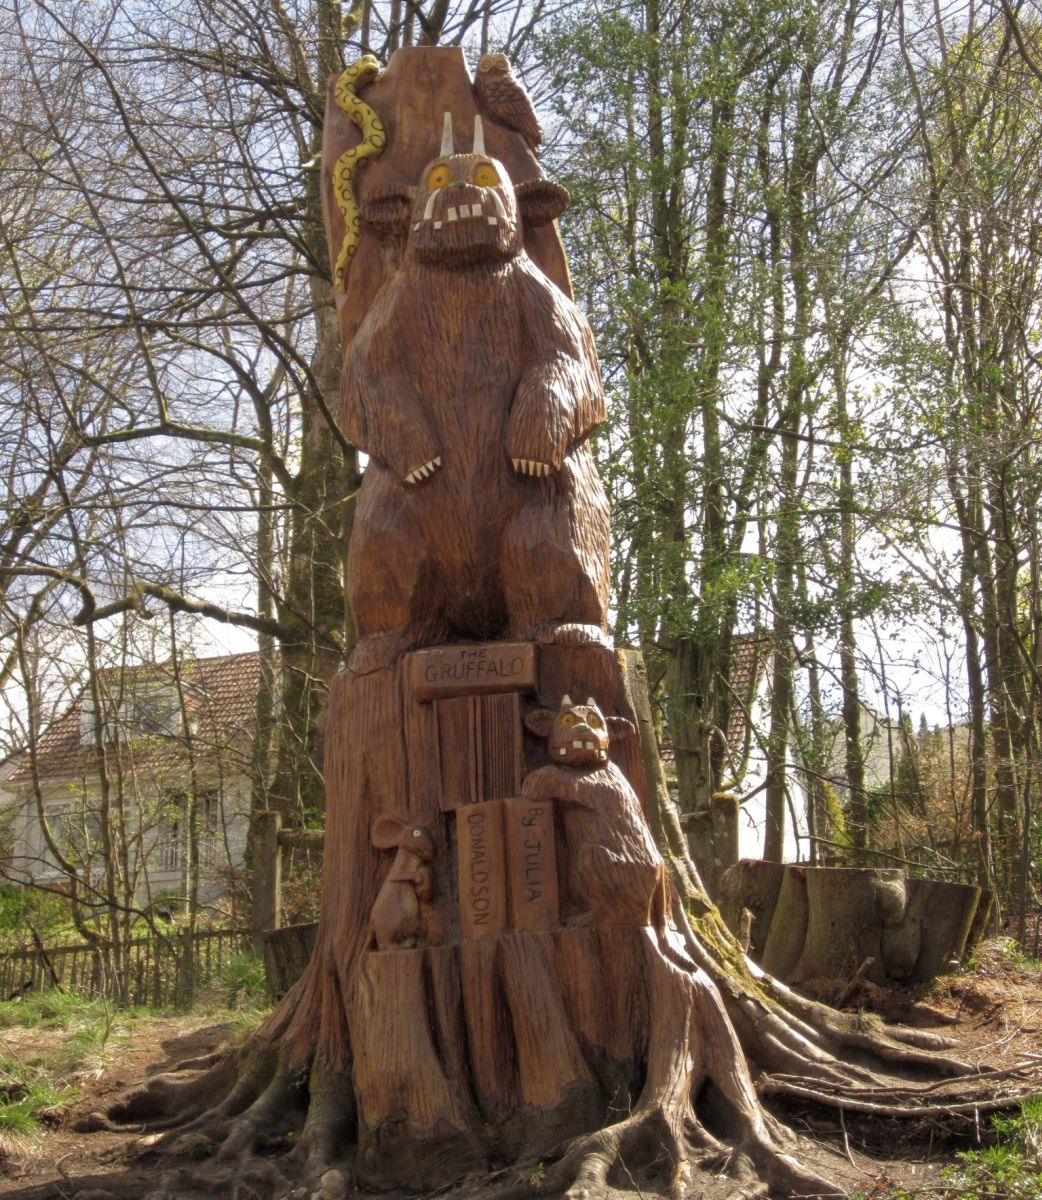 The Gruffalo Carved Beech Log at Kilmardinny Loch in Bearsden